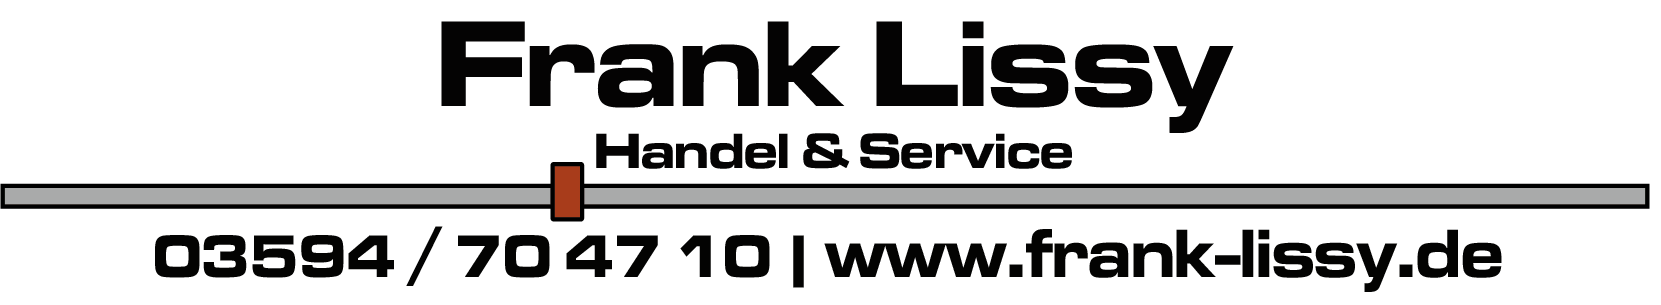 Frank Lissy Handel & Service